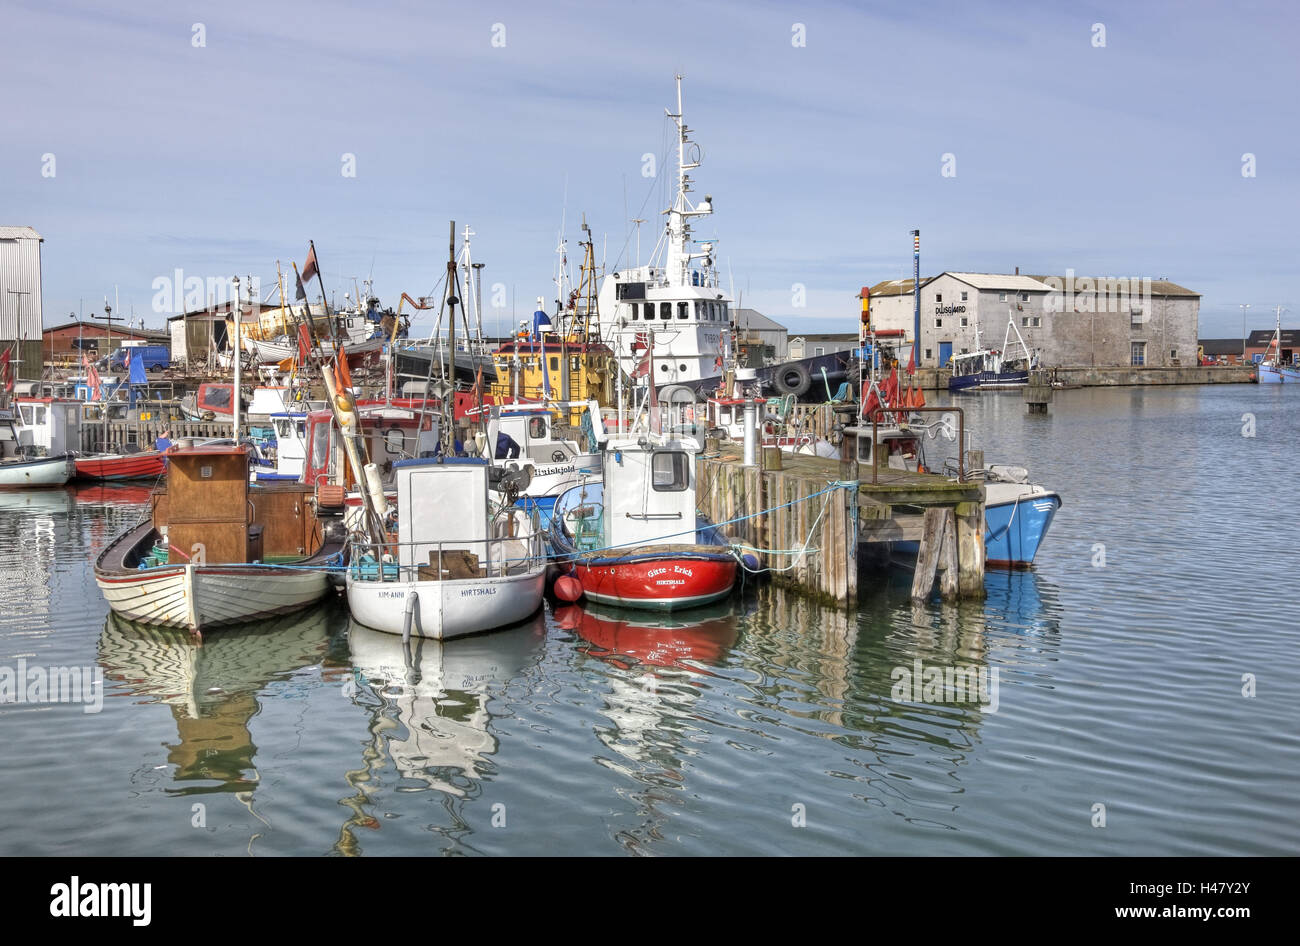 Denmark, Jutland, Hirtshals, harbour, fishing boats, fishing, North Sea, shipping, boats, ships, no people, bridge, building, Stock Photo